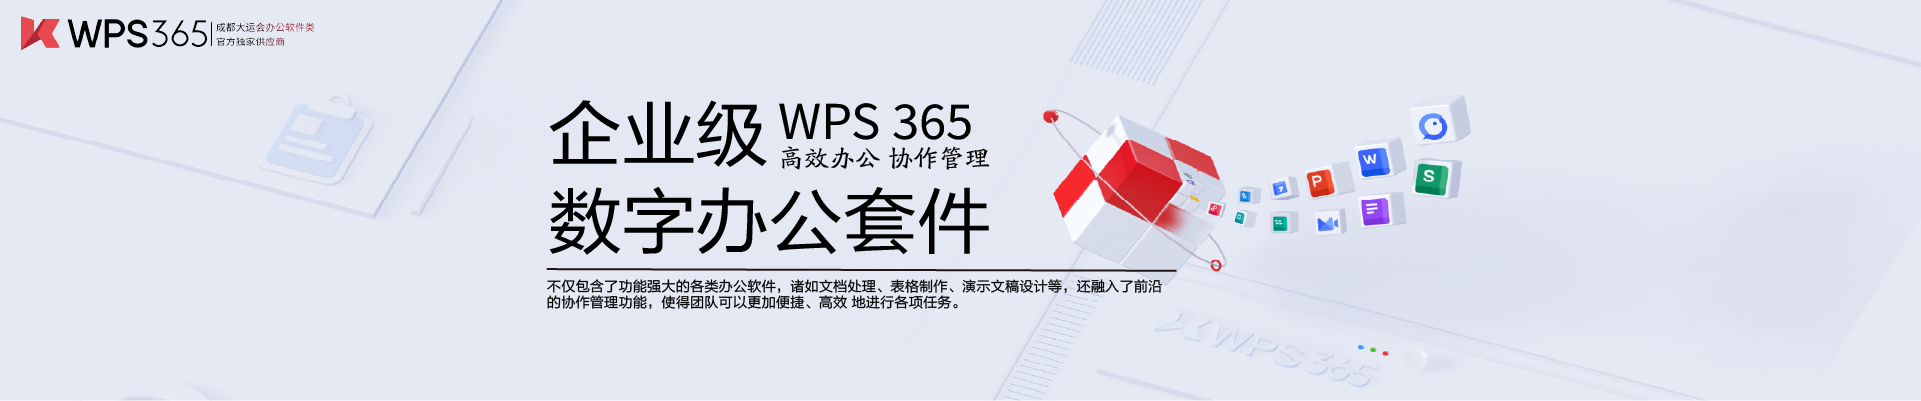 wps365